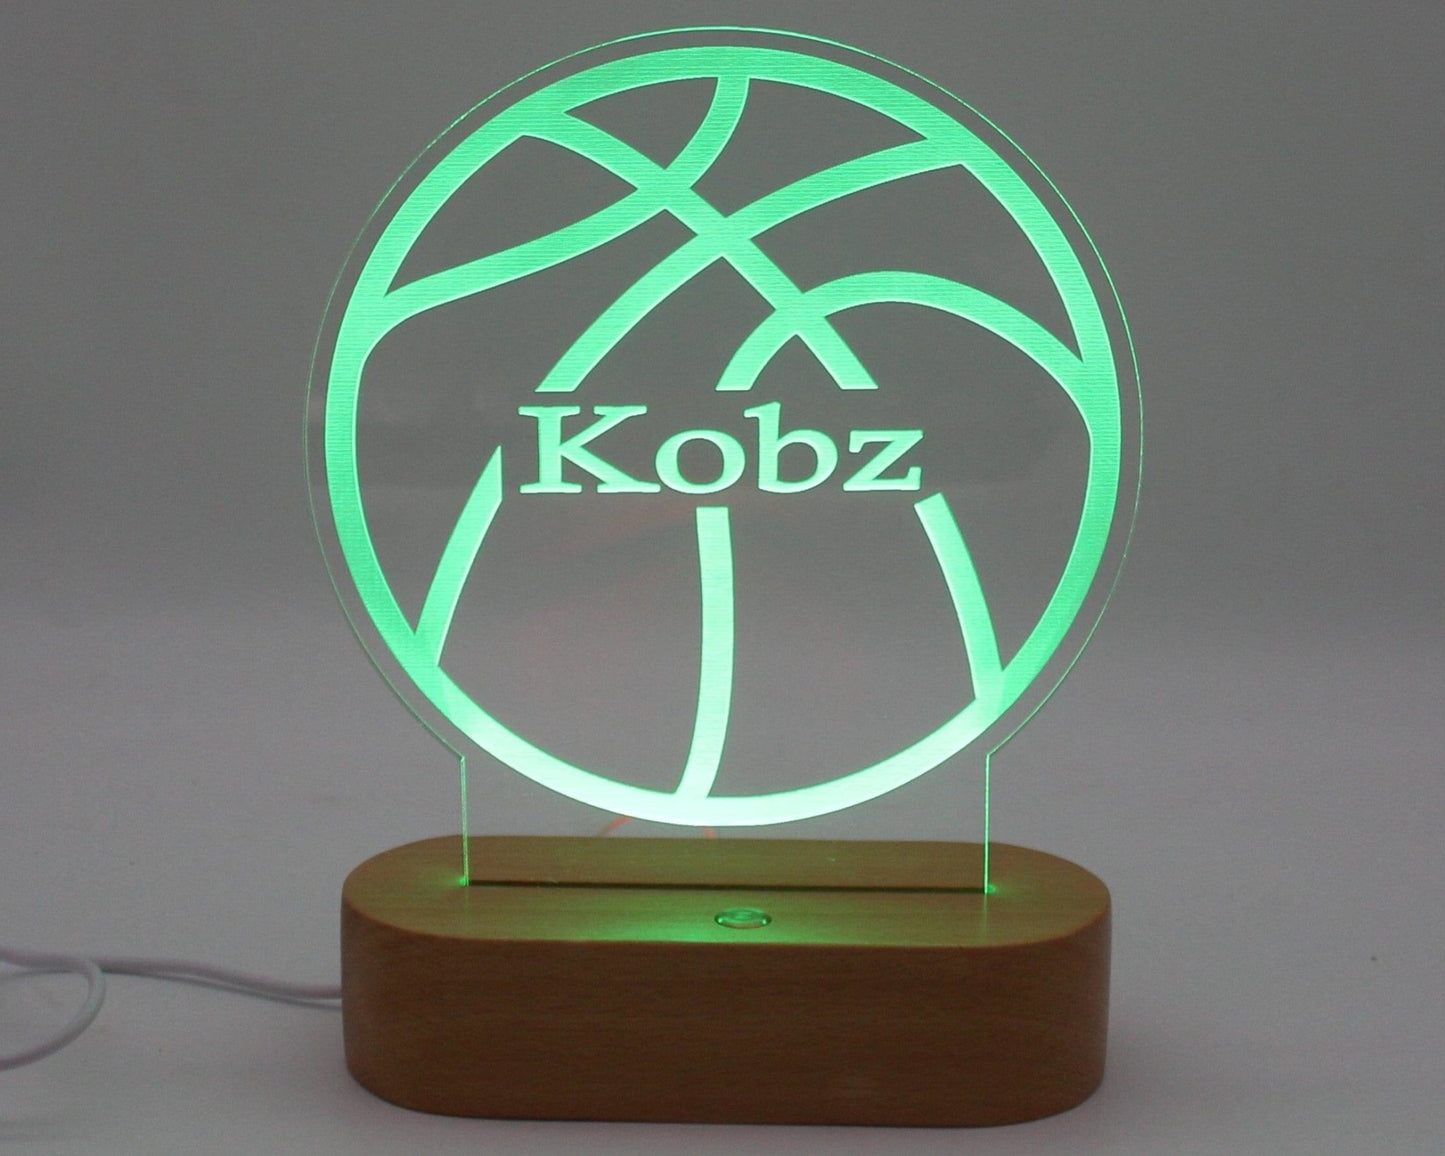 Basketball Light Personalised - Haisley Design